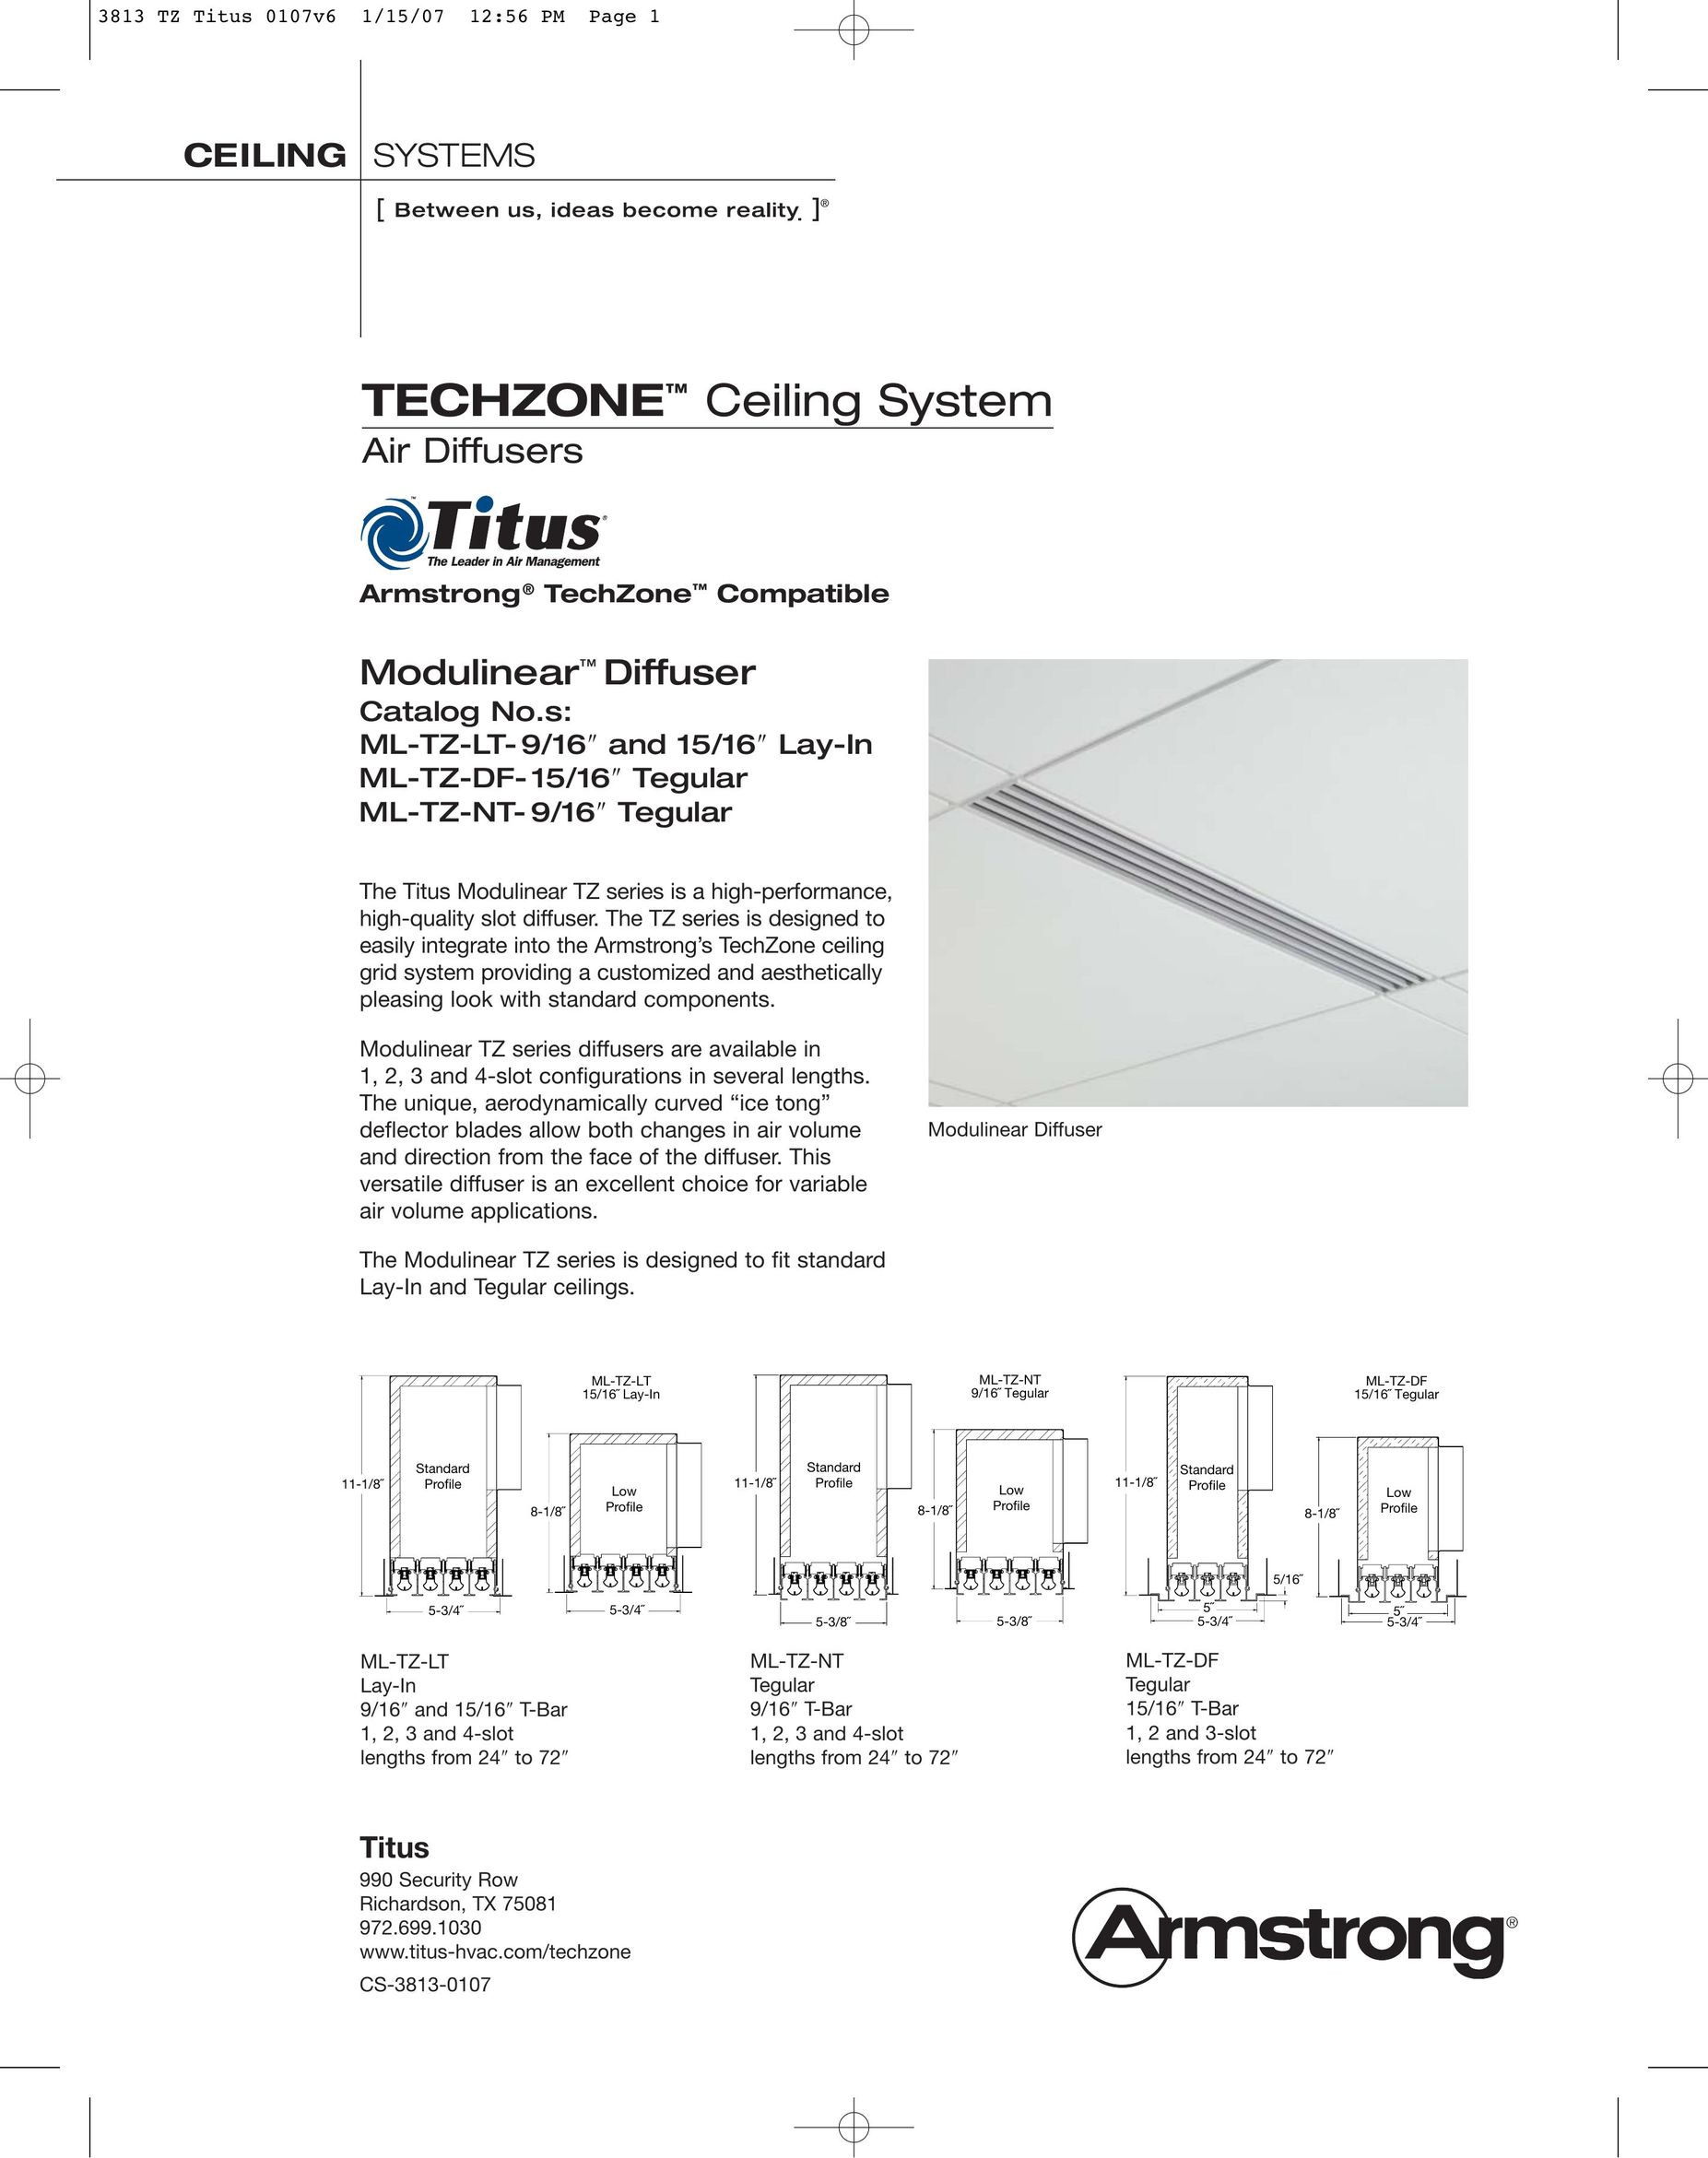 Armstrong World Industries ML-TZ-NT Indoor Furnishings User Manual